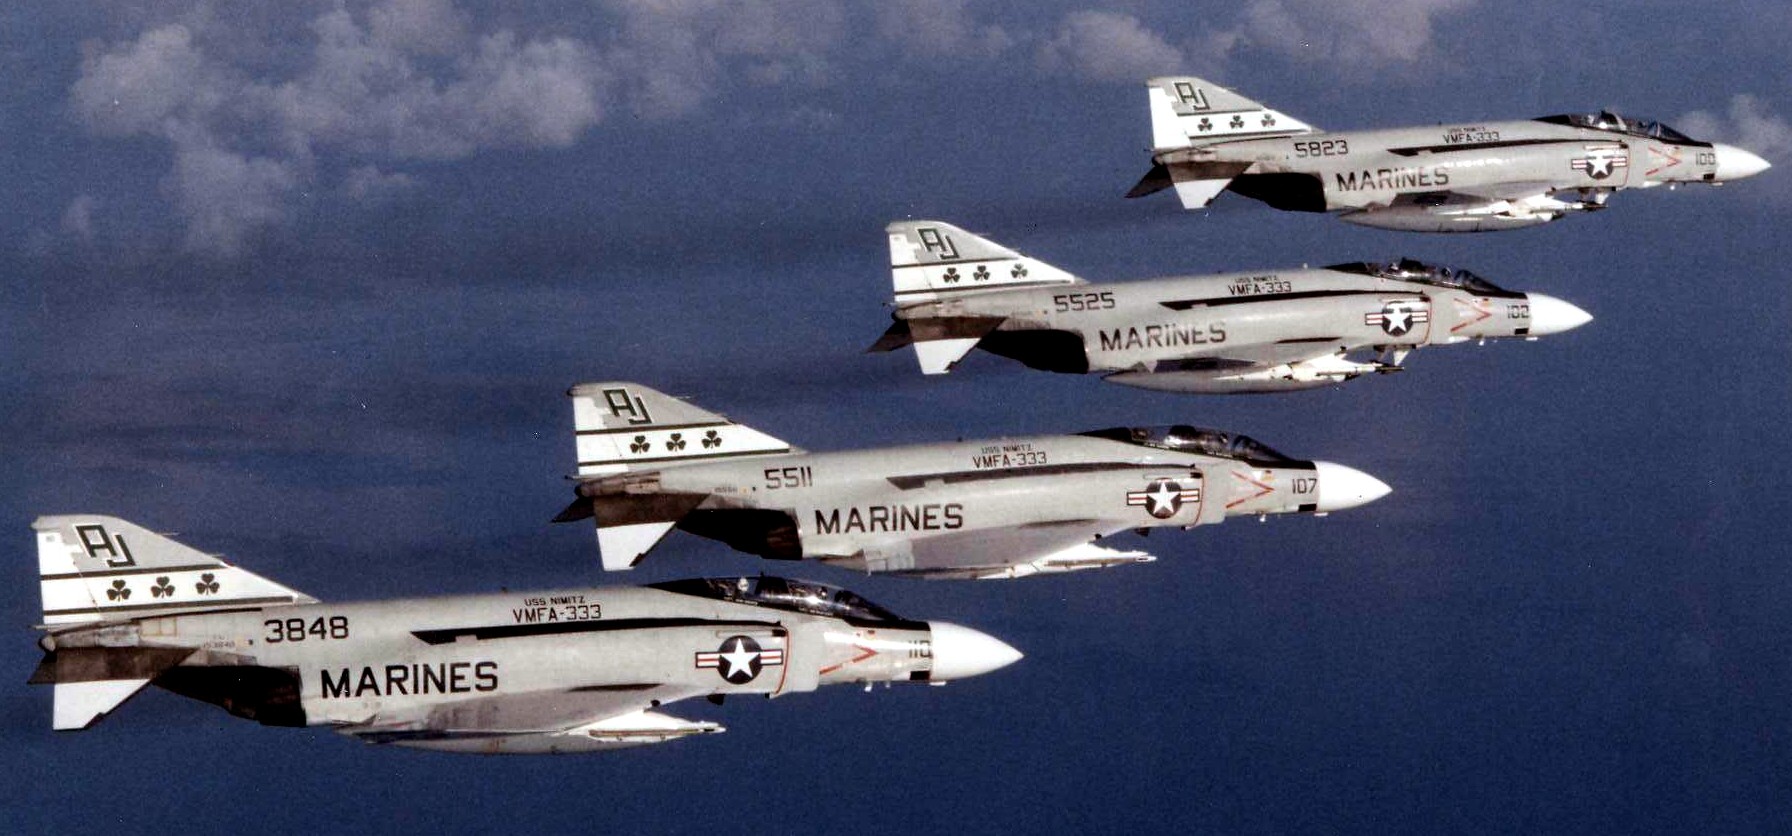 vmfa-333 fighting shamrocks marine fighter attack squadron usmc f-4j phantom ii 07x